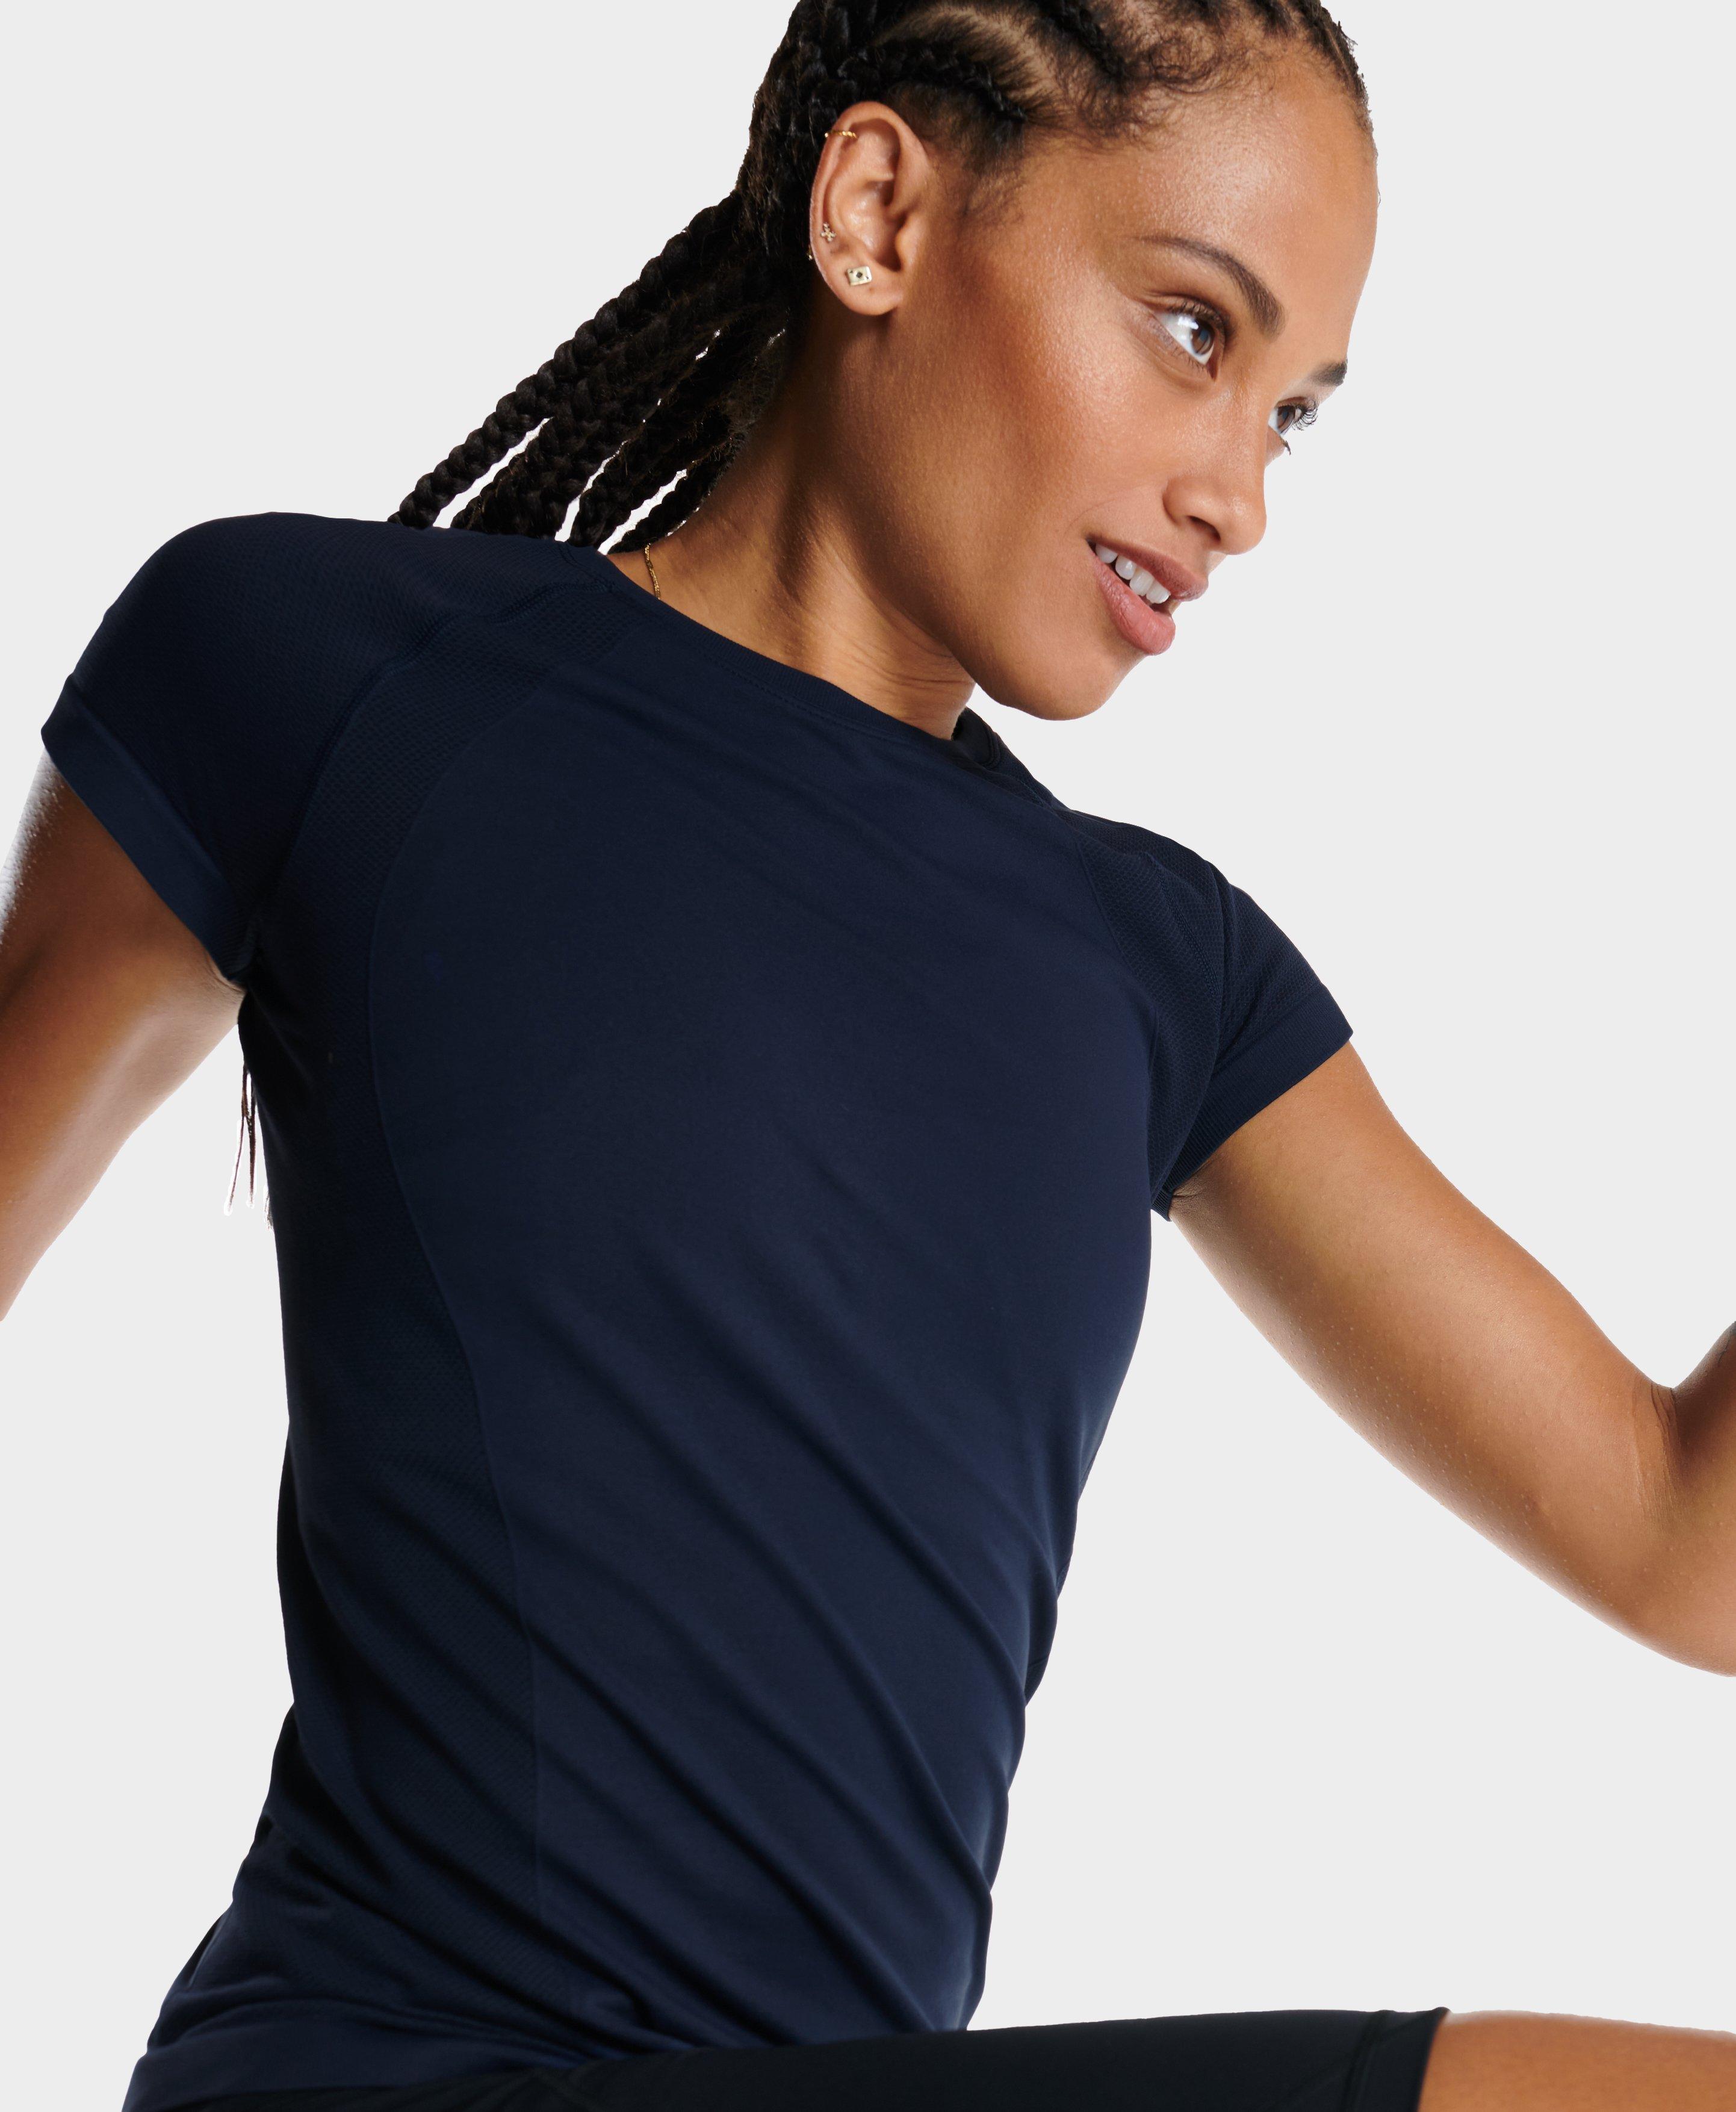 Athlete Seamless Workout Tee - Navy Blue, Women's T-Shirts